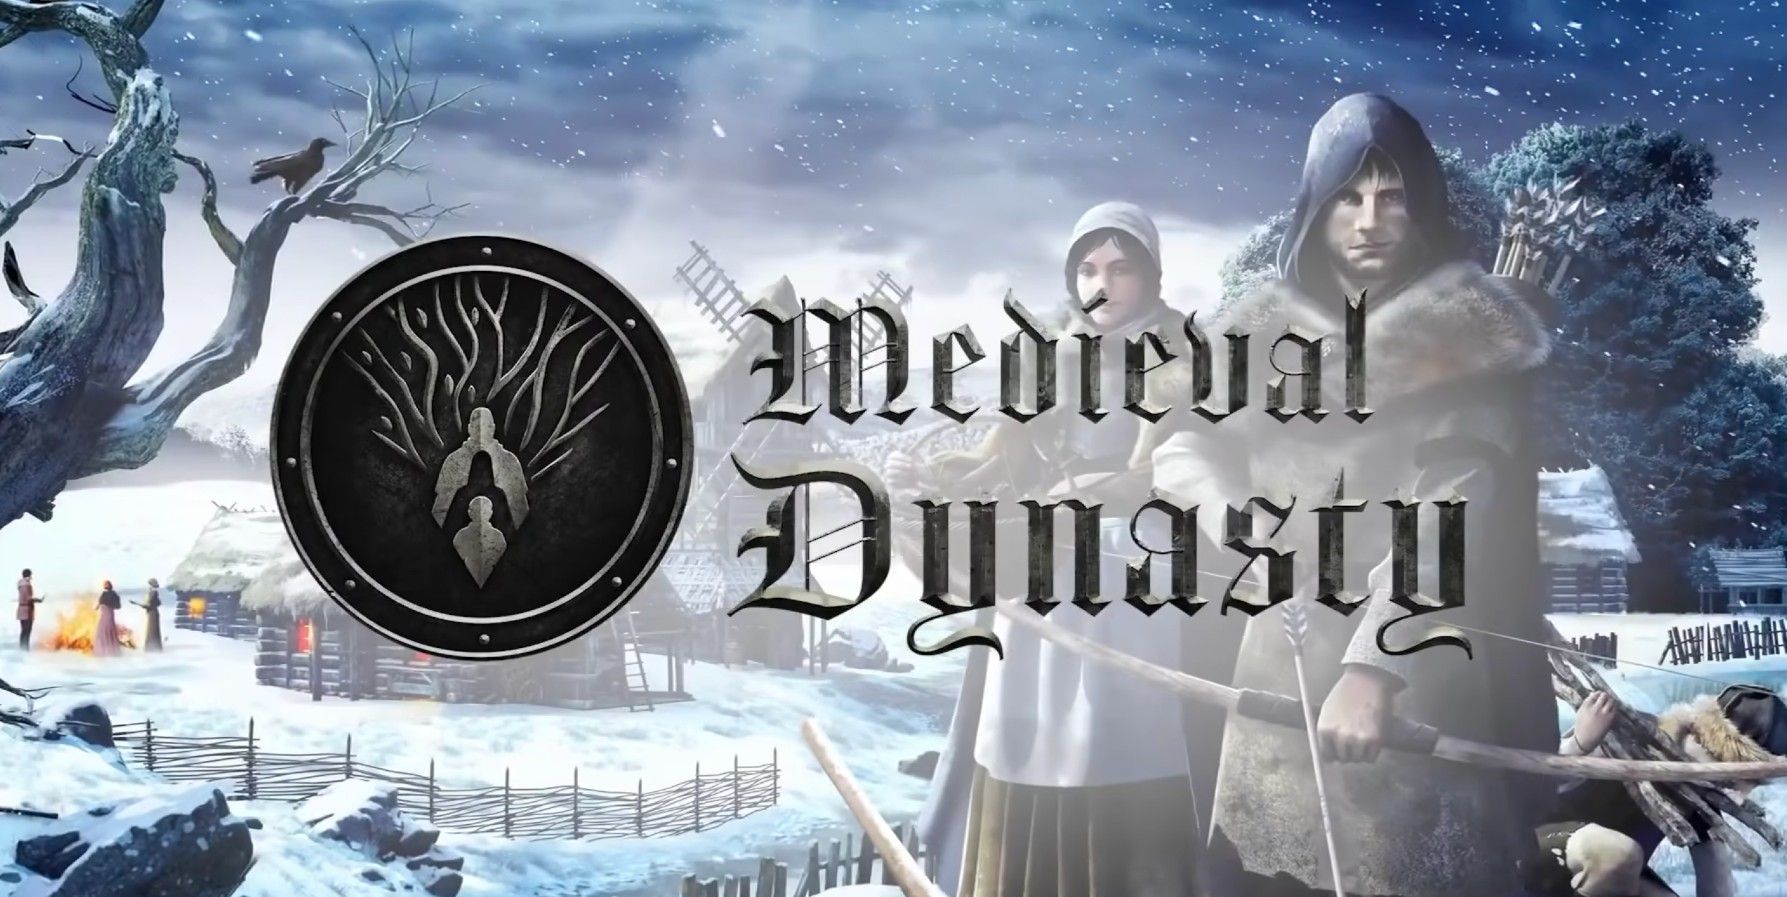 medieval dynasty trailer title image